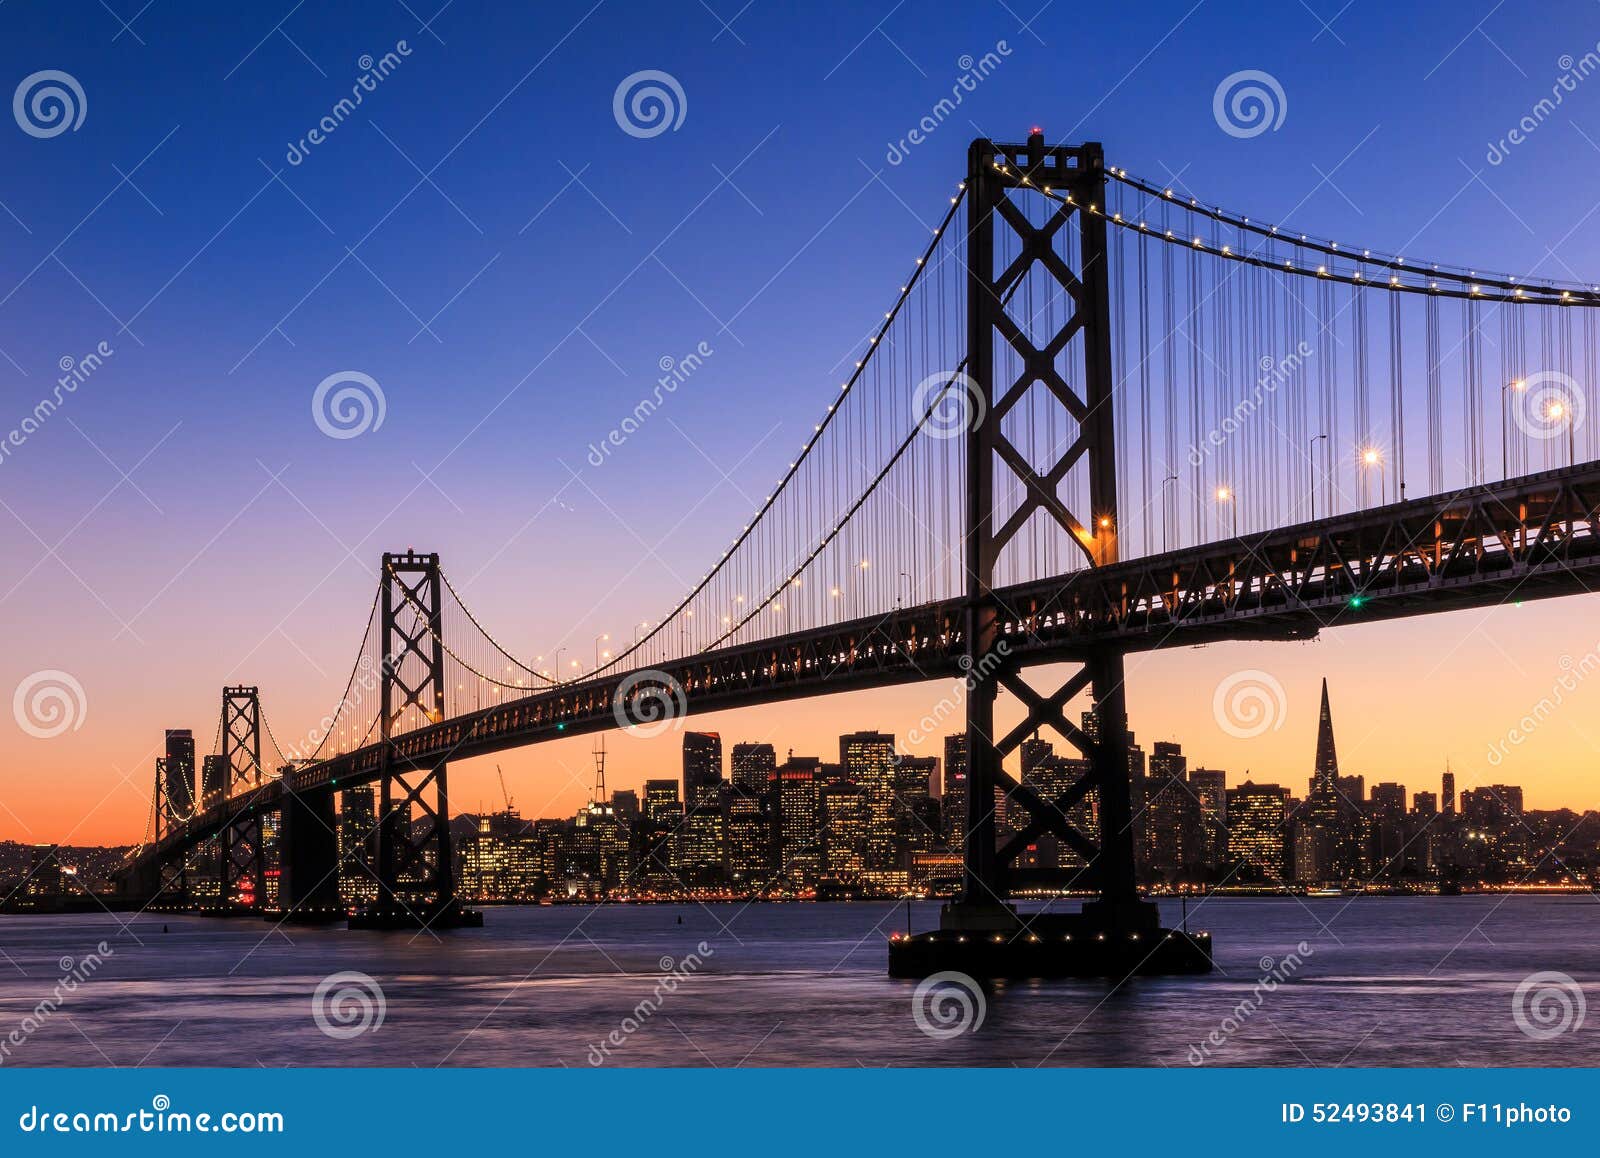 Golden Gate Bridge di notte, San Francisco, USA. | Vsco, Notte